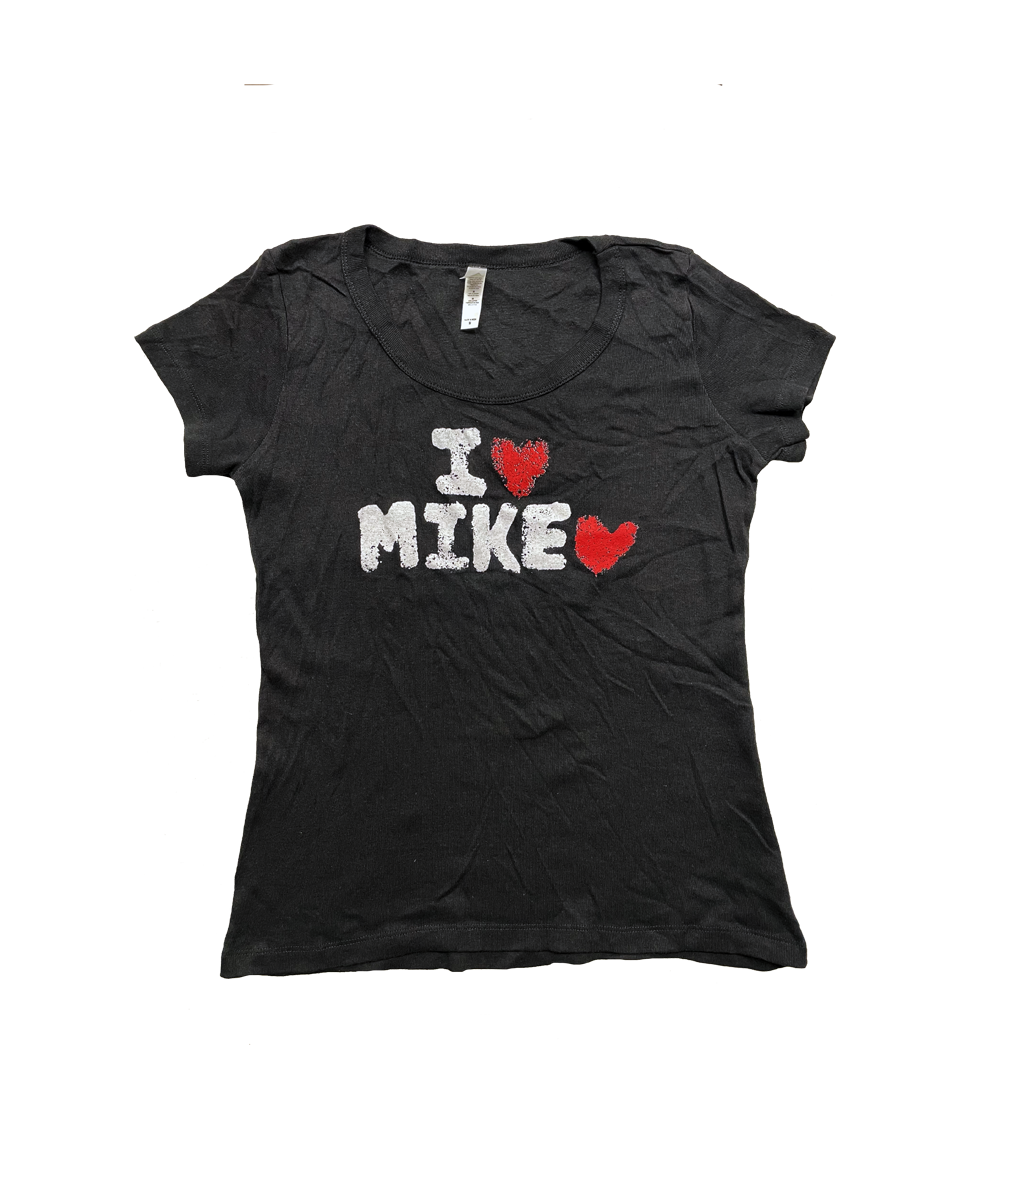 Women's I Love Mike Love Tee (Black)